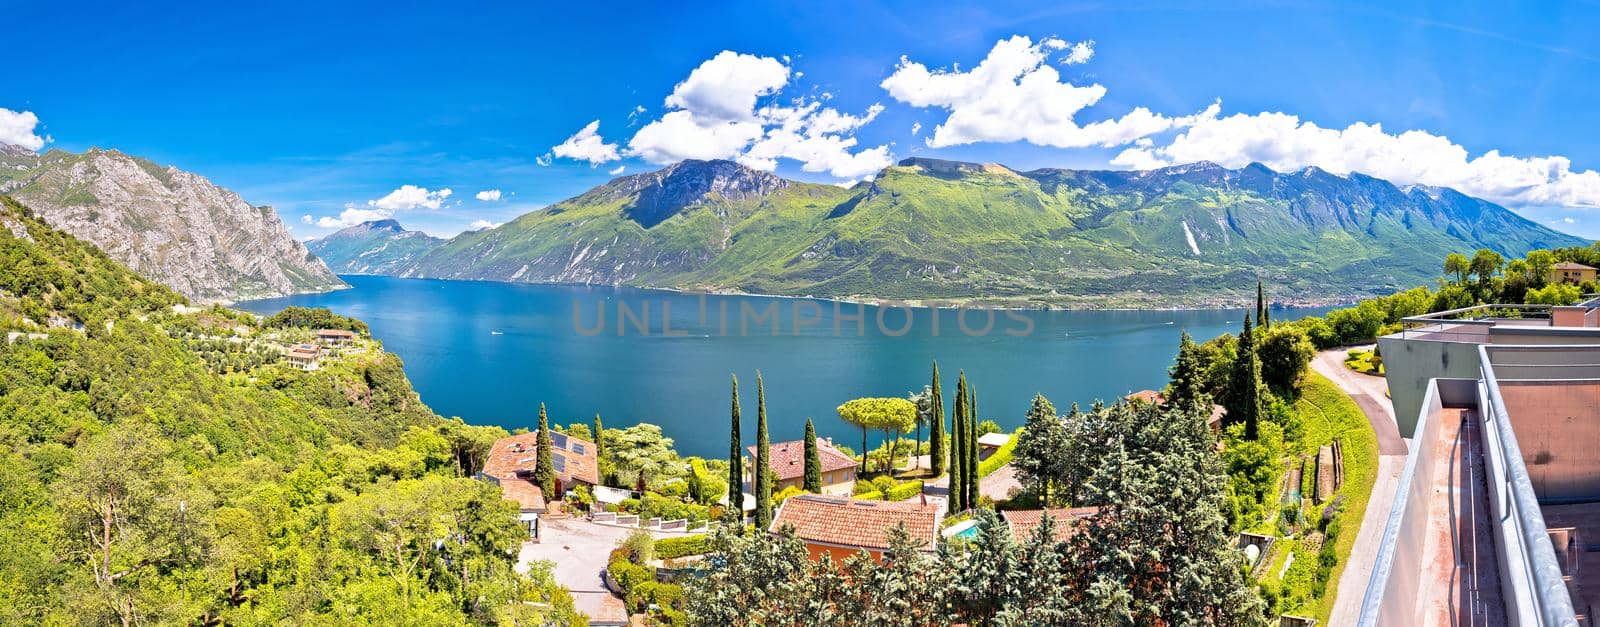 Lago di Garda lake panoramic scenic view, Limone sul Garda, Lombardia region of Italy